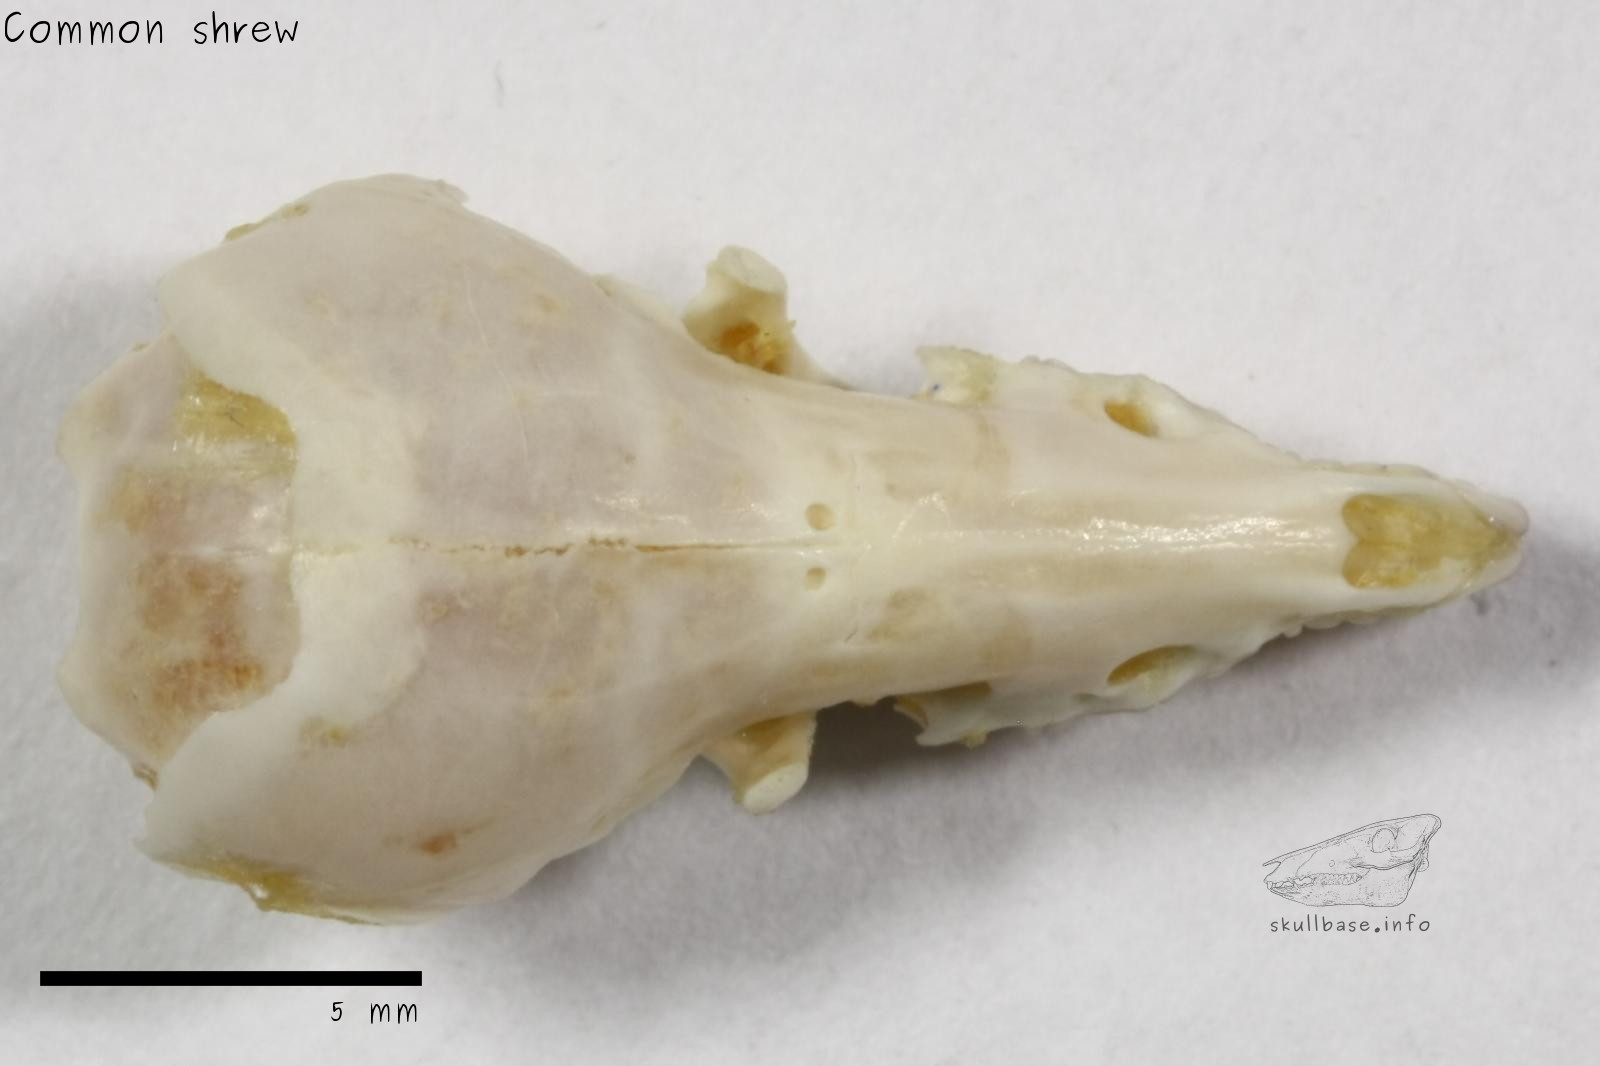 Common shrew (Sorex araneus) skull dorsal view